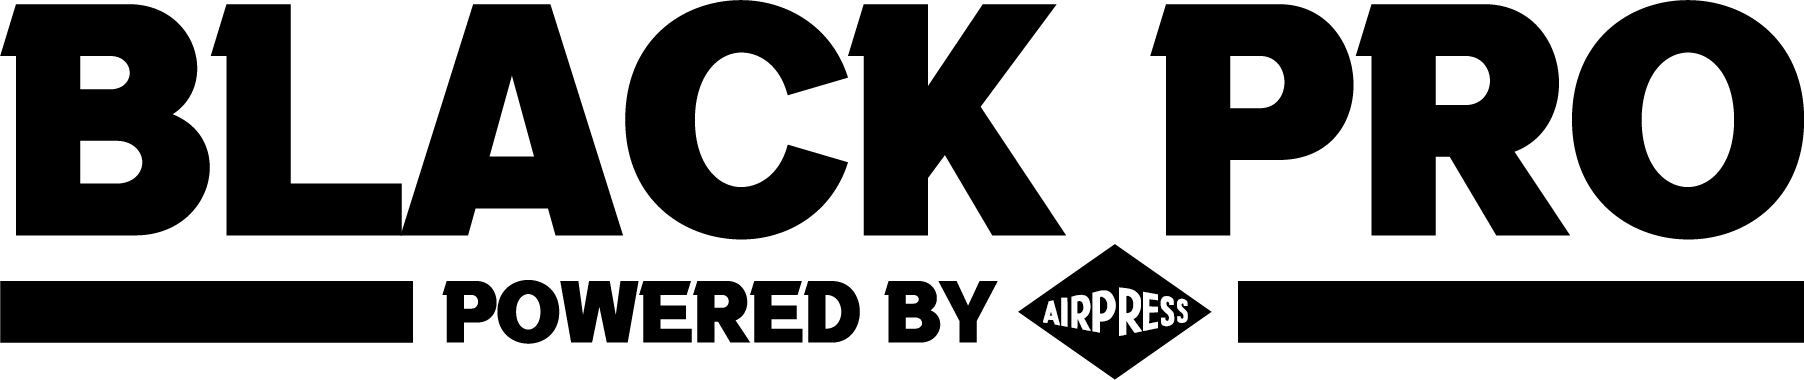 Black pro logo